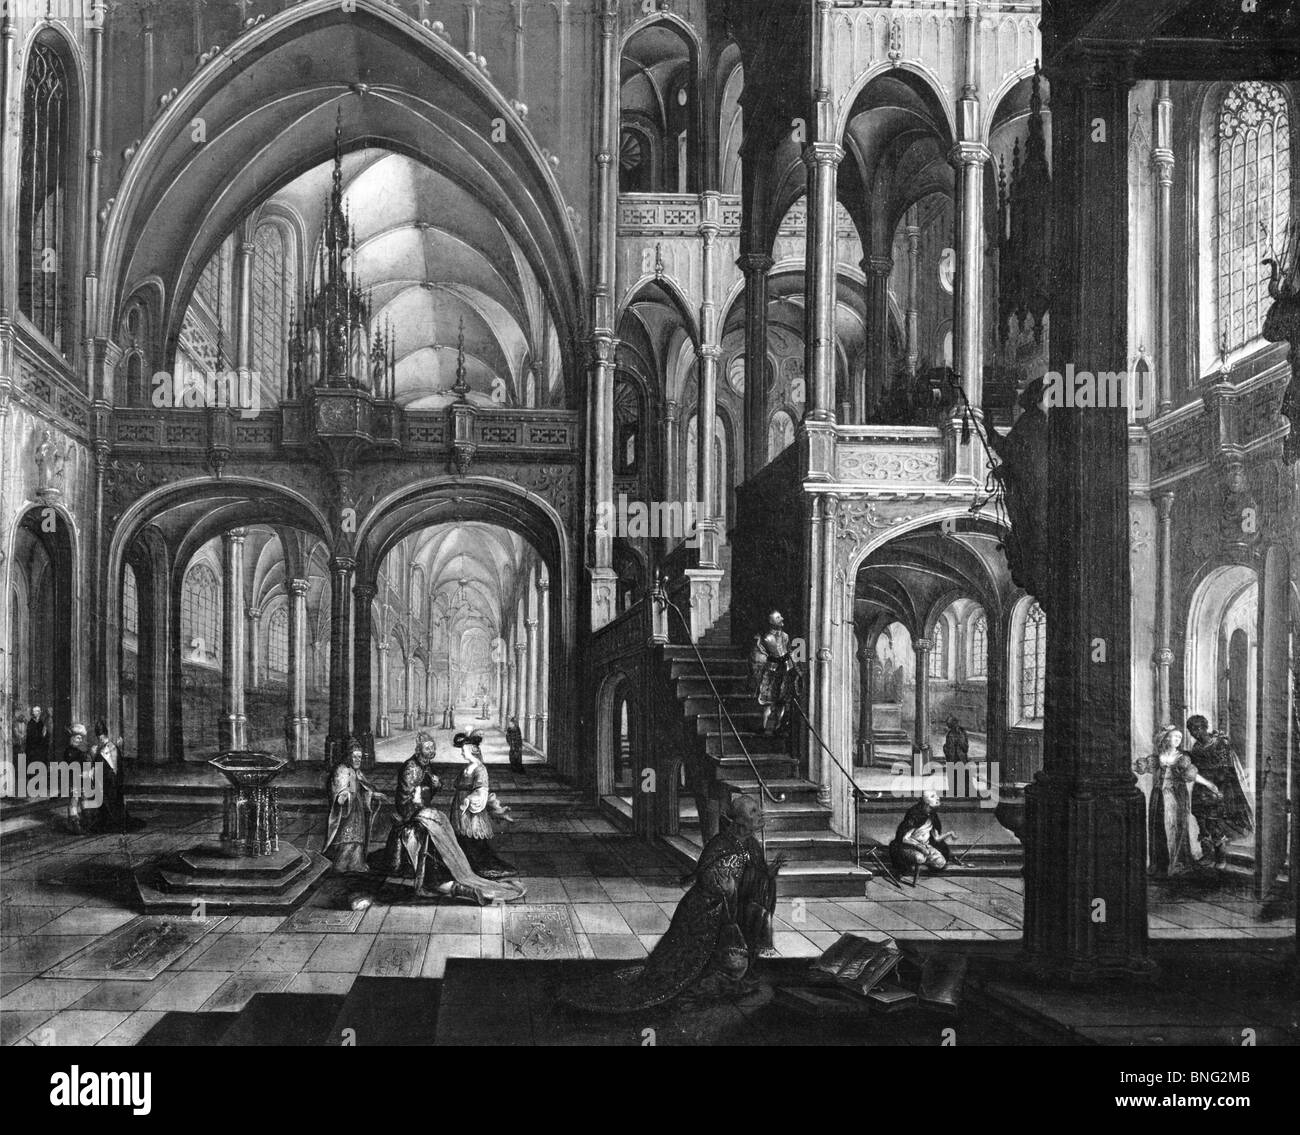 Interior de una iglesia por Hendrick Aerts, 1570-1628 Foto de stock